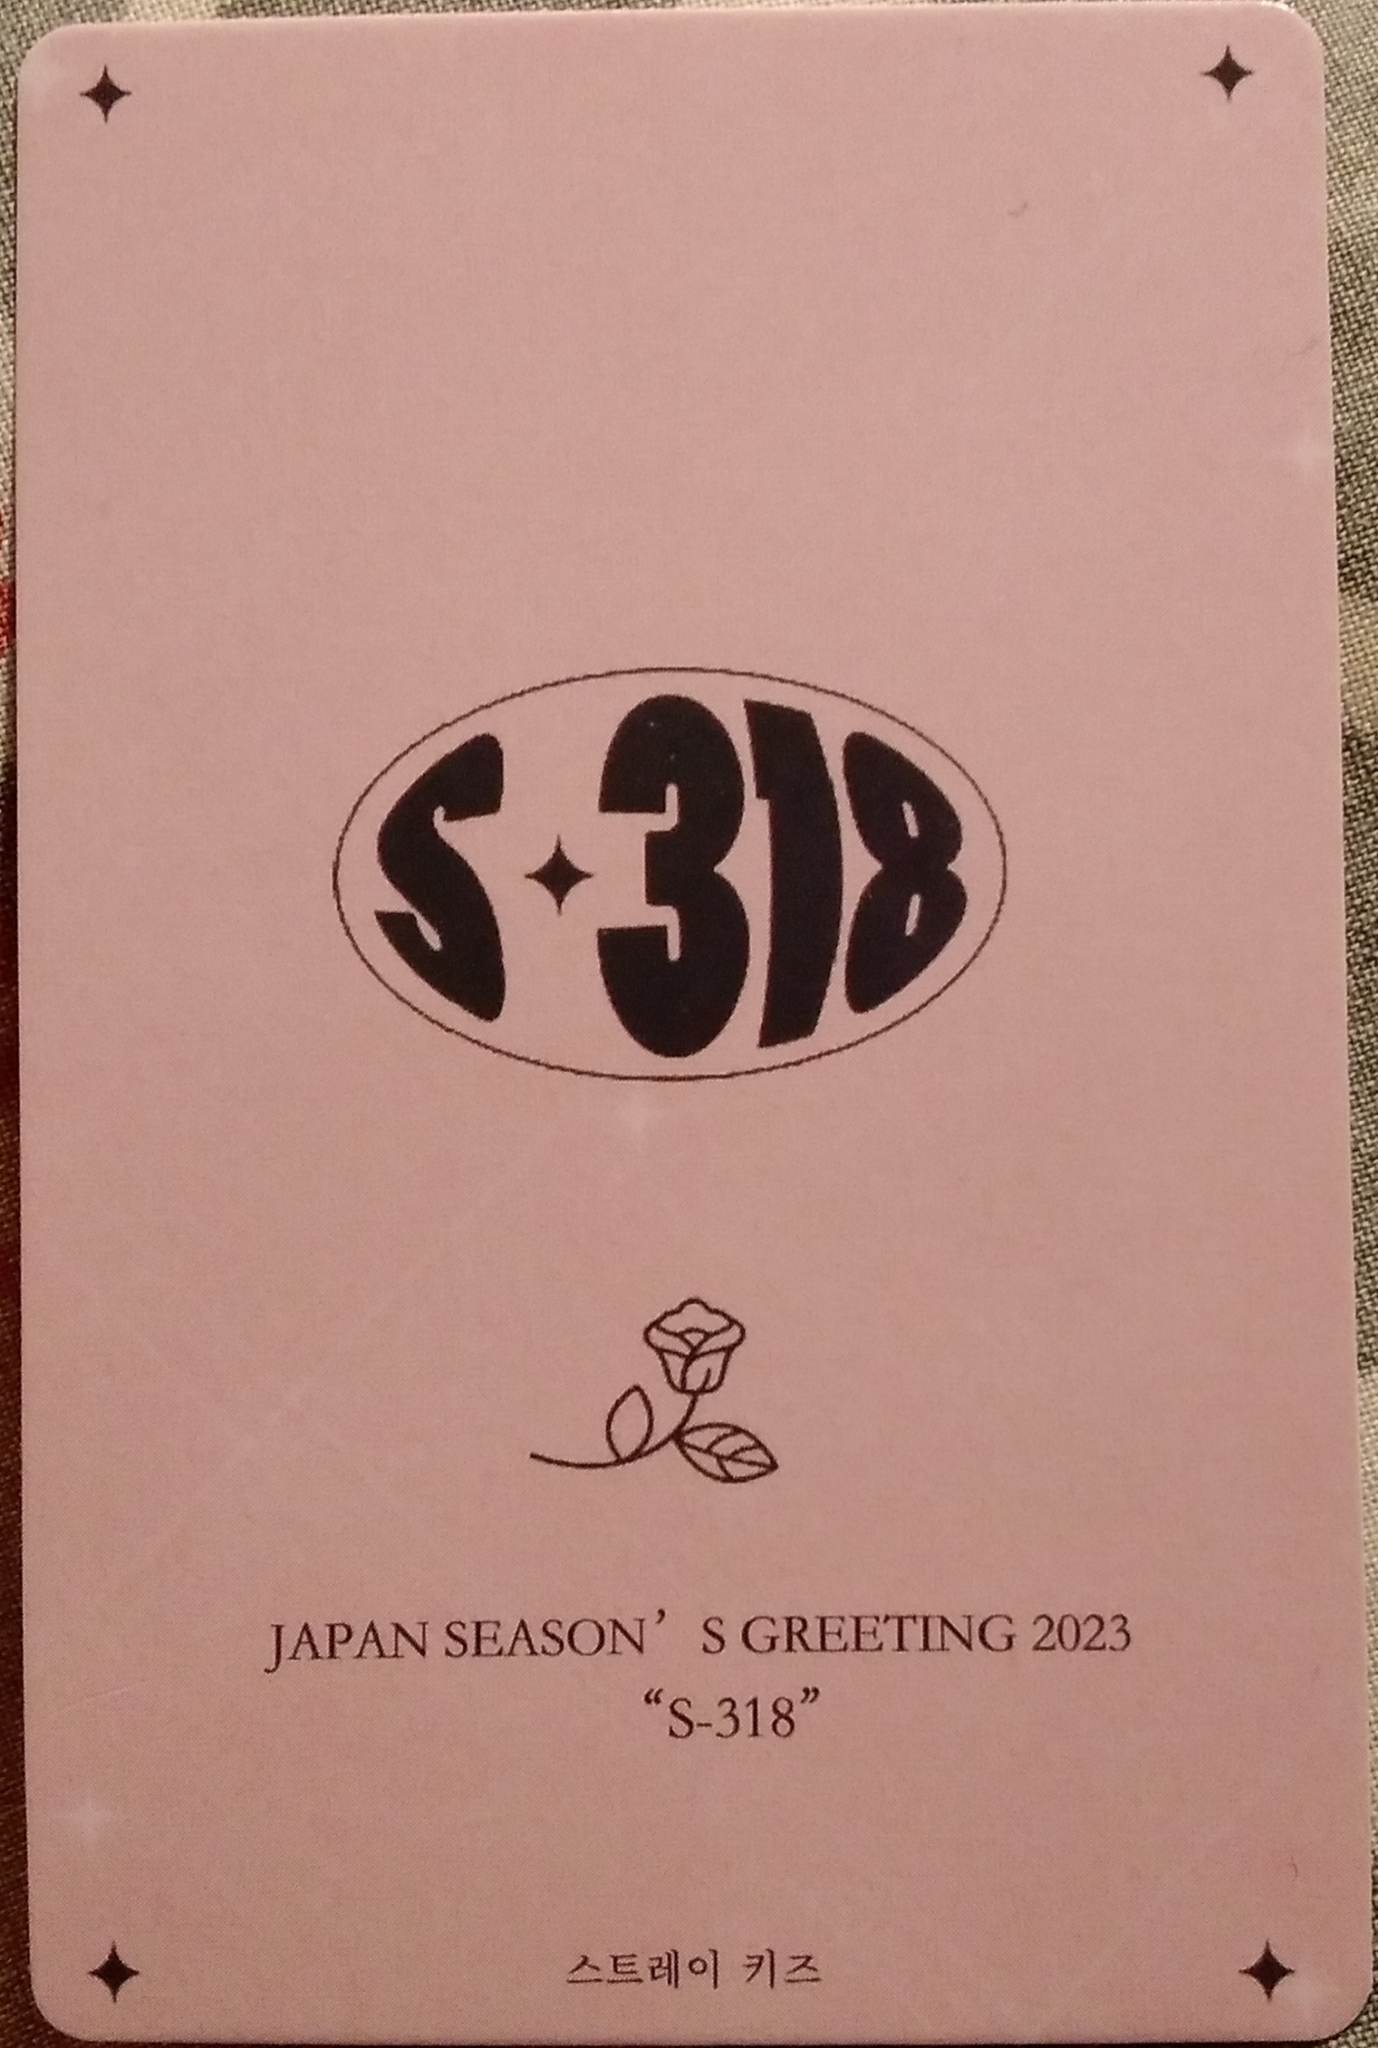 Photocard  STRAYKIDS  Japan season s greetings 2023  "S-318"  Lee know